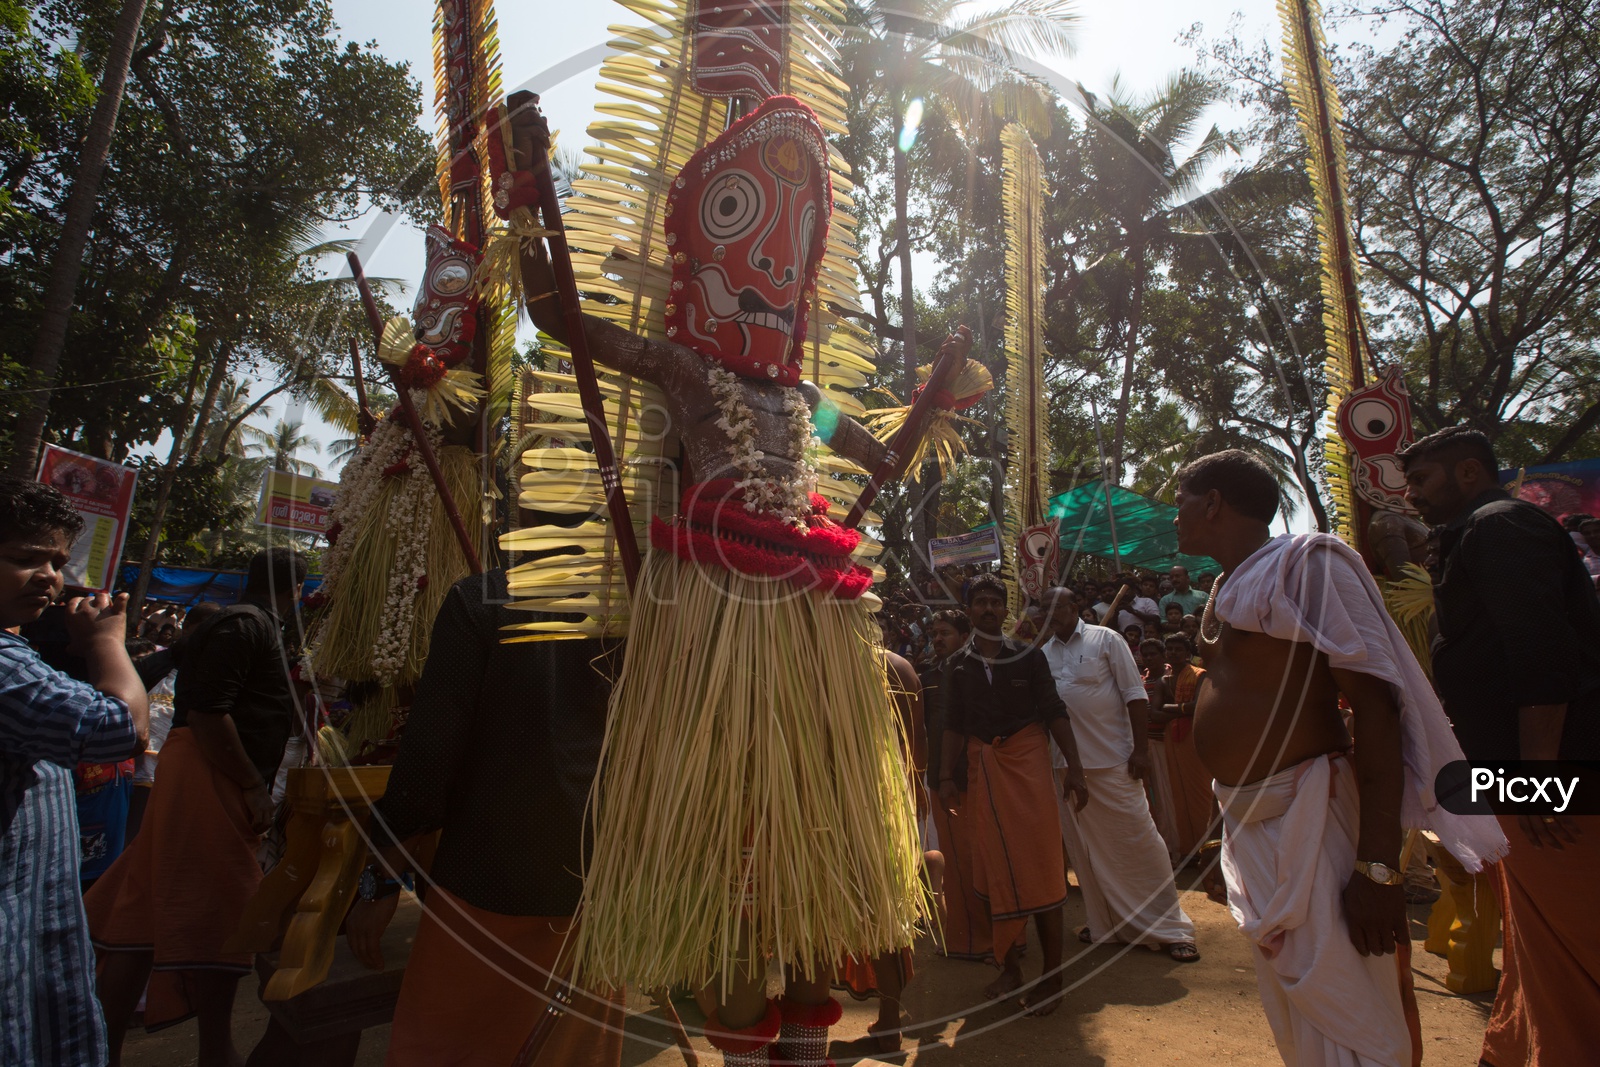 Kerala People Celebrating Theyyam A Traditional  Tribal Ritual Dance Art Form Worshiping   Bhagavatthi Amman